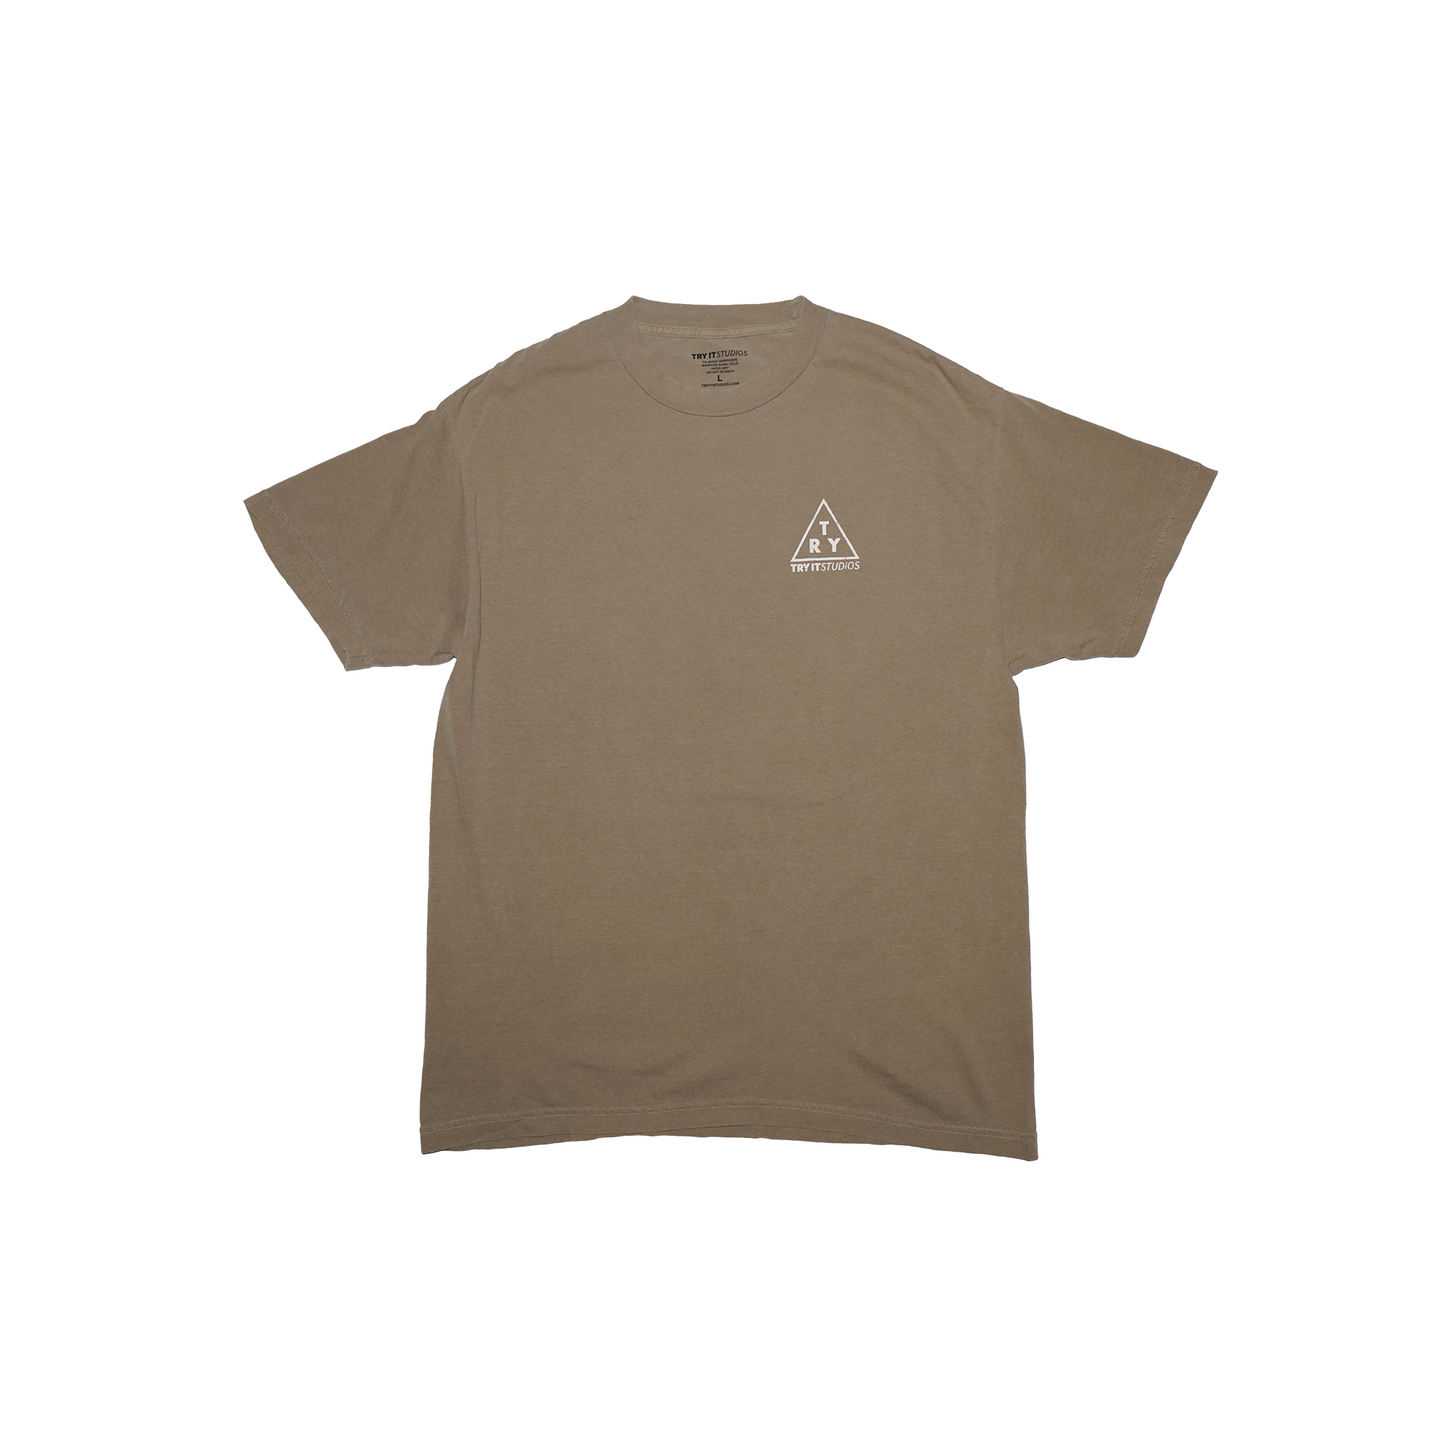 Try-Angle T-Shirt (BROWN)